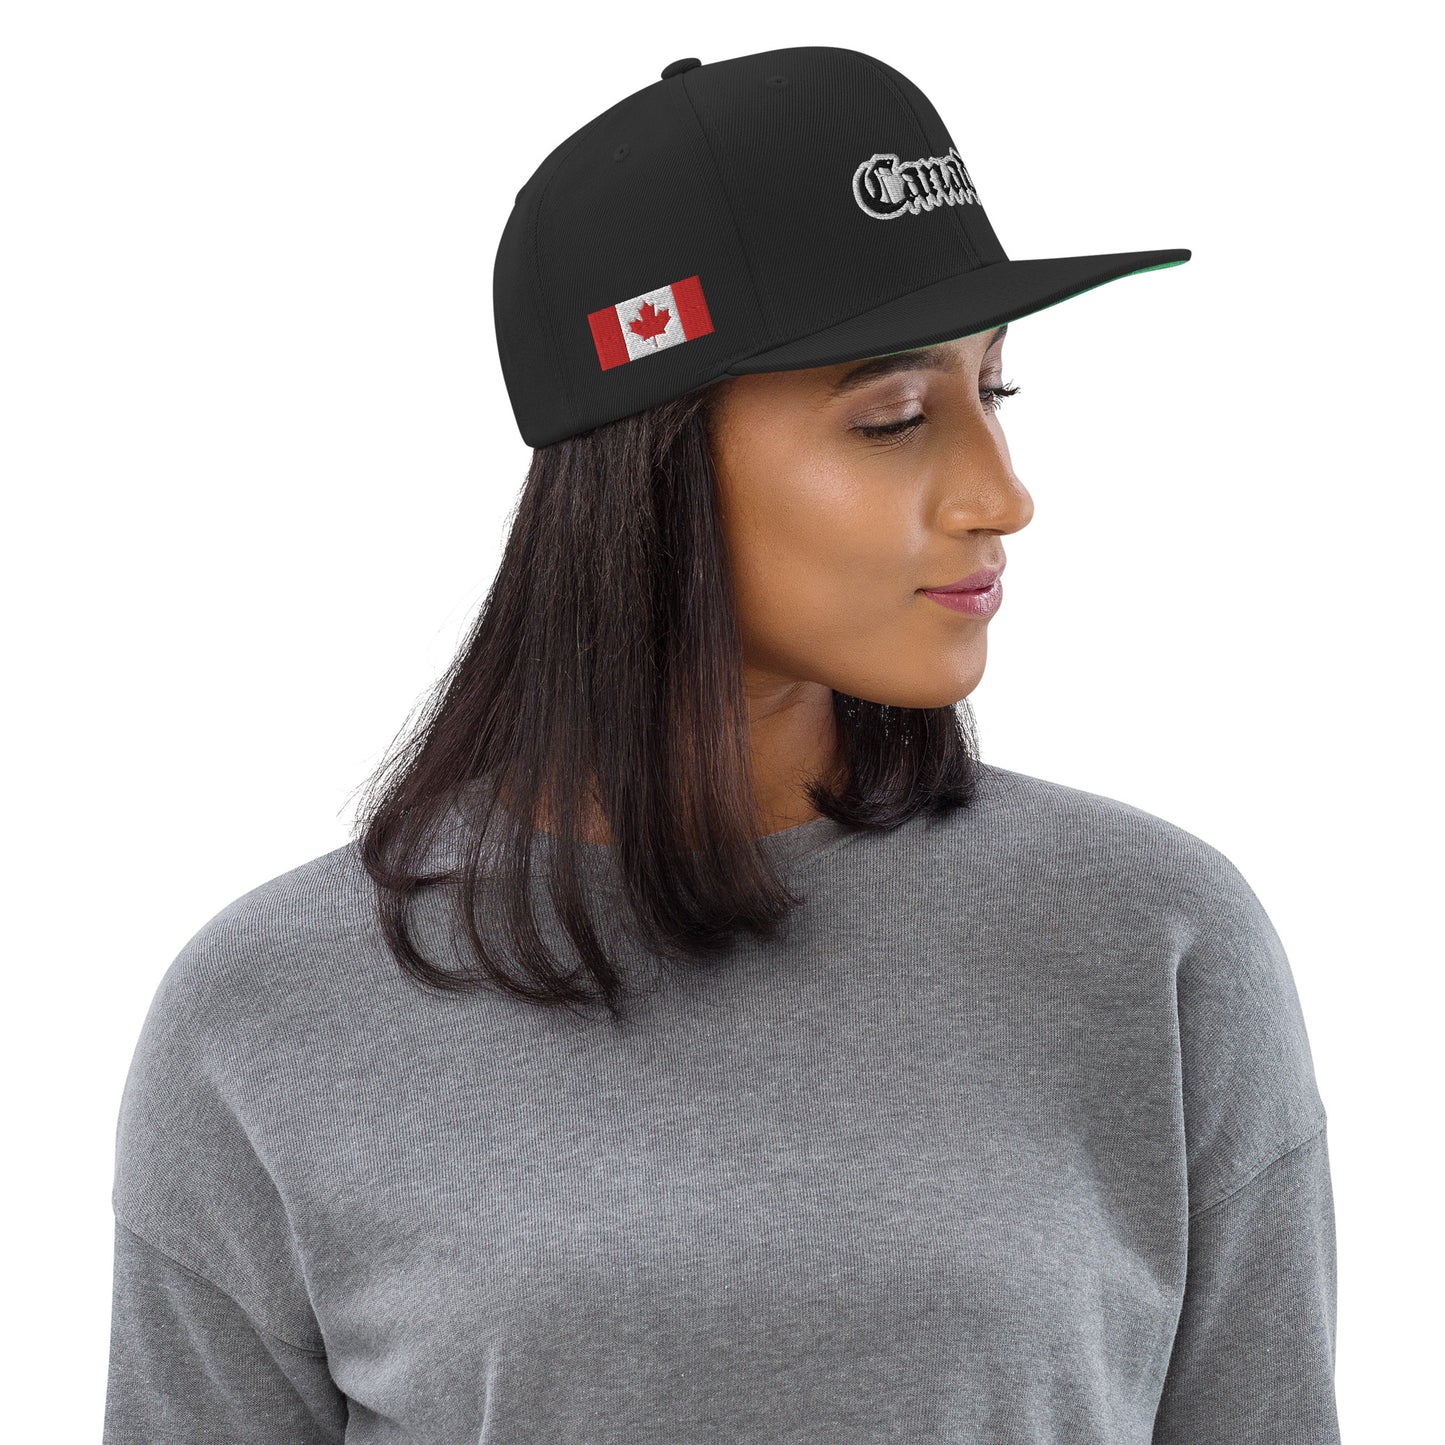 Heritage & Honor Snapback Cap 'Canada'